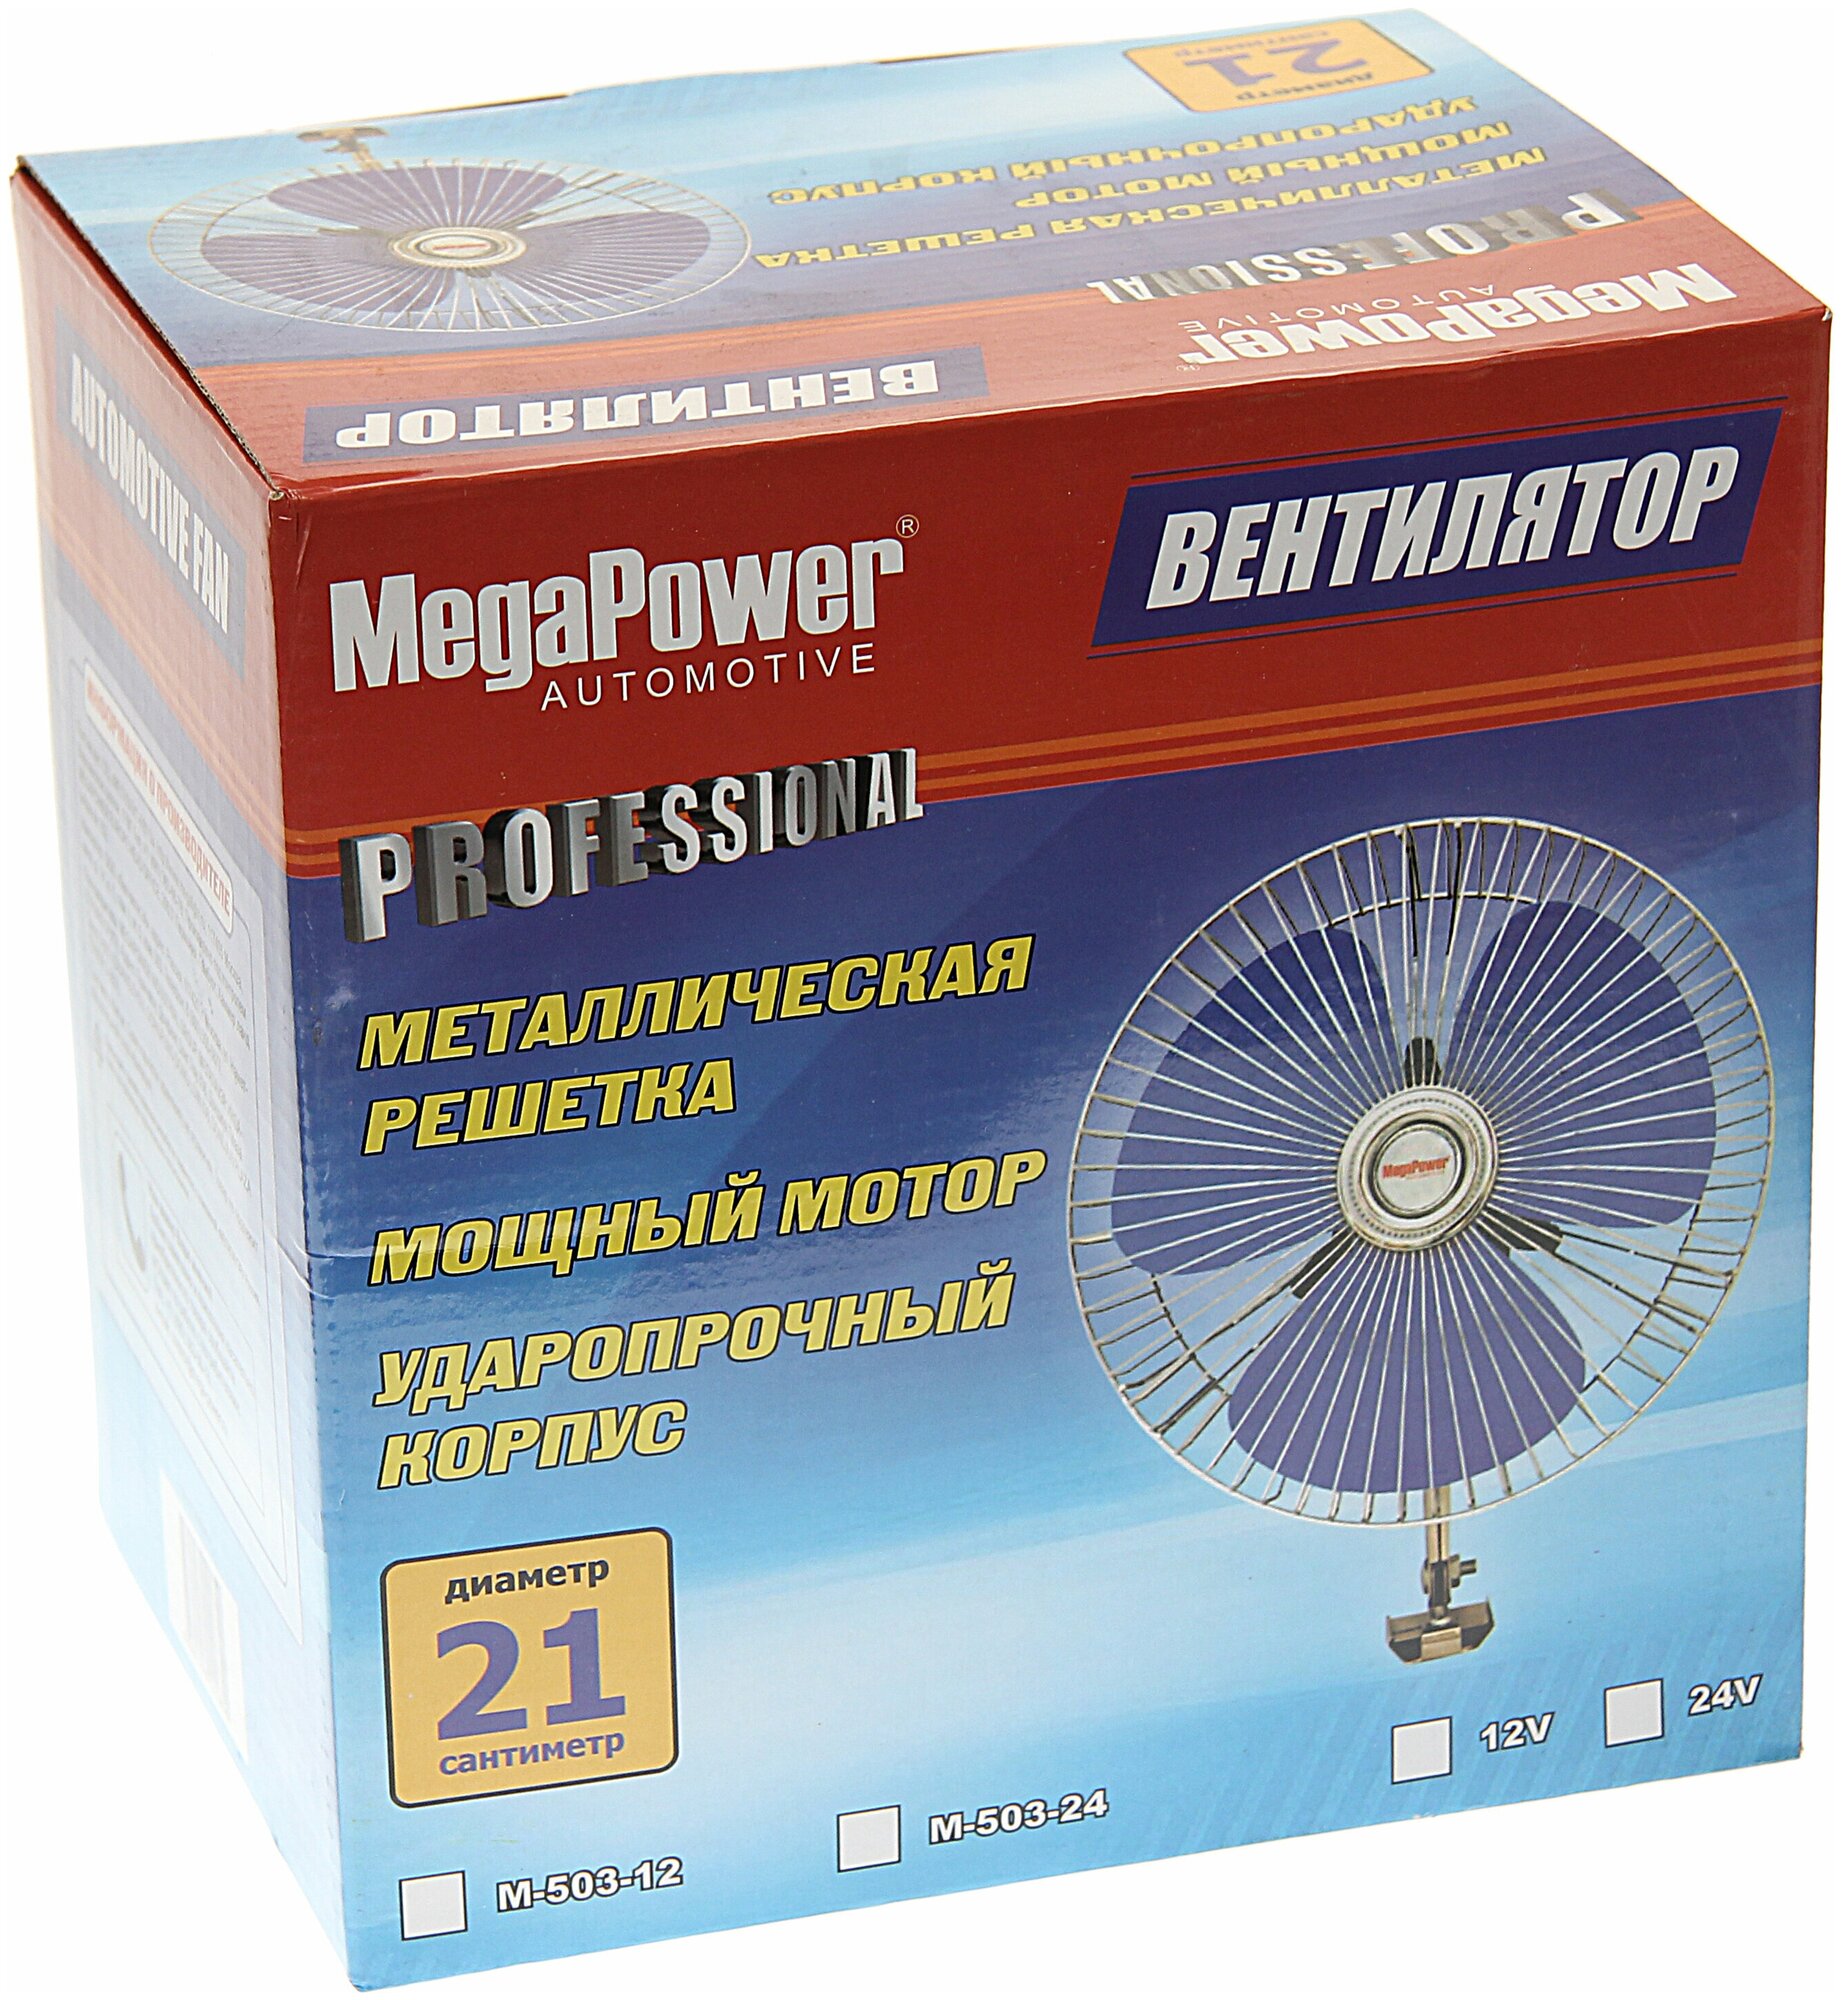 Вентилятор Megapower 21 см, 12V, с решеткой металл